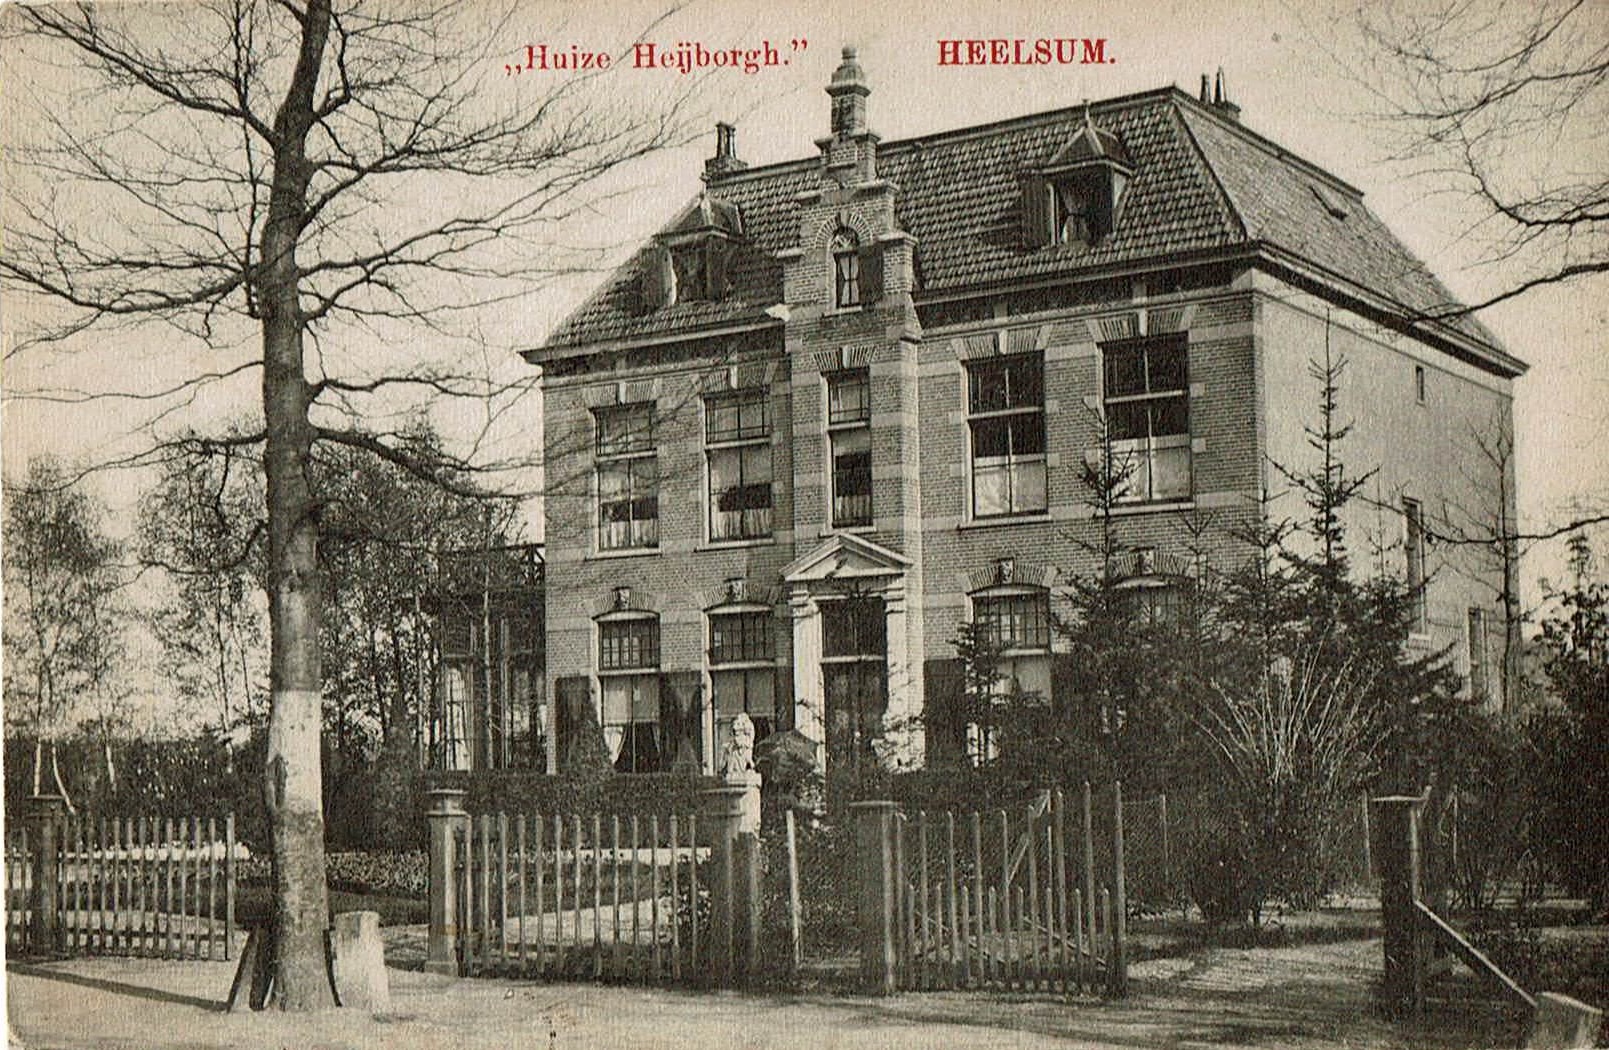 Villa Heyborgh